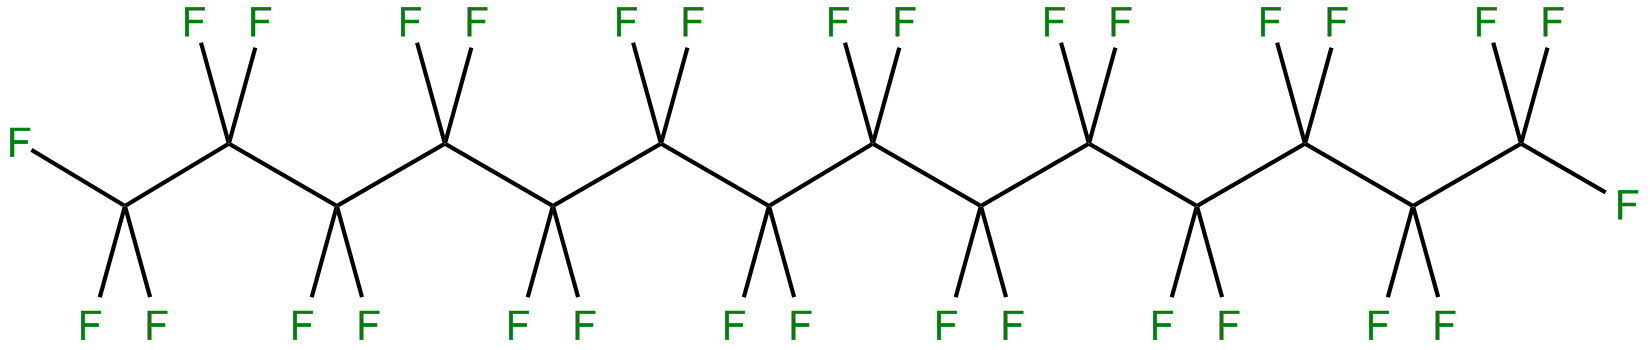 Image of triacontafluorotetradecane